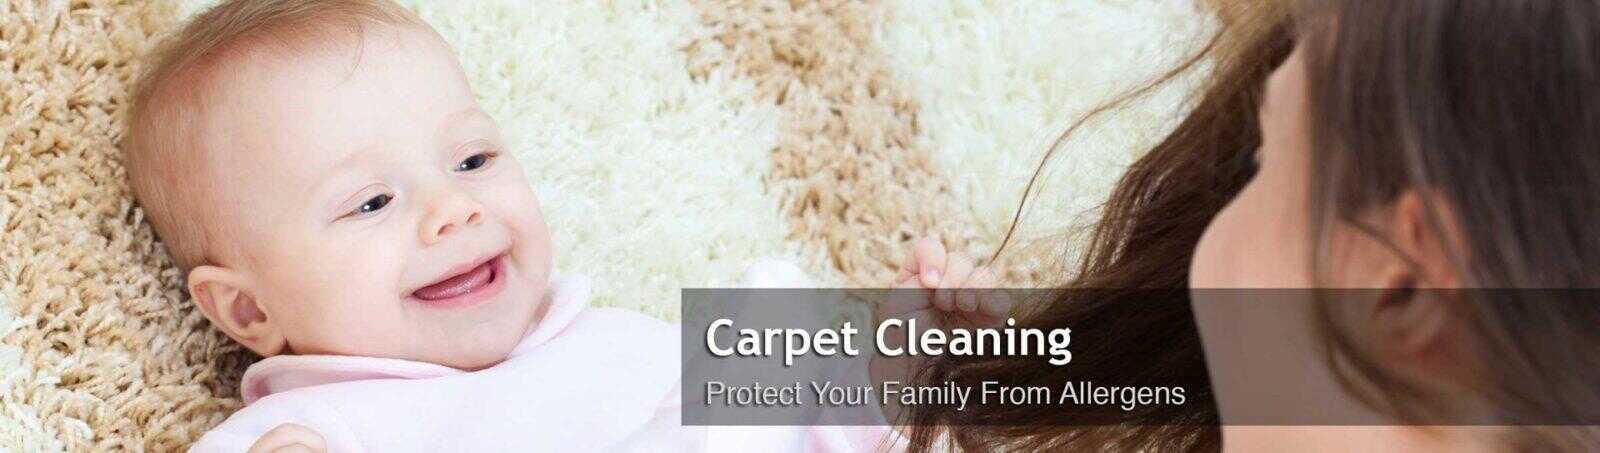 tim carpet cleaning banner